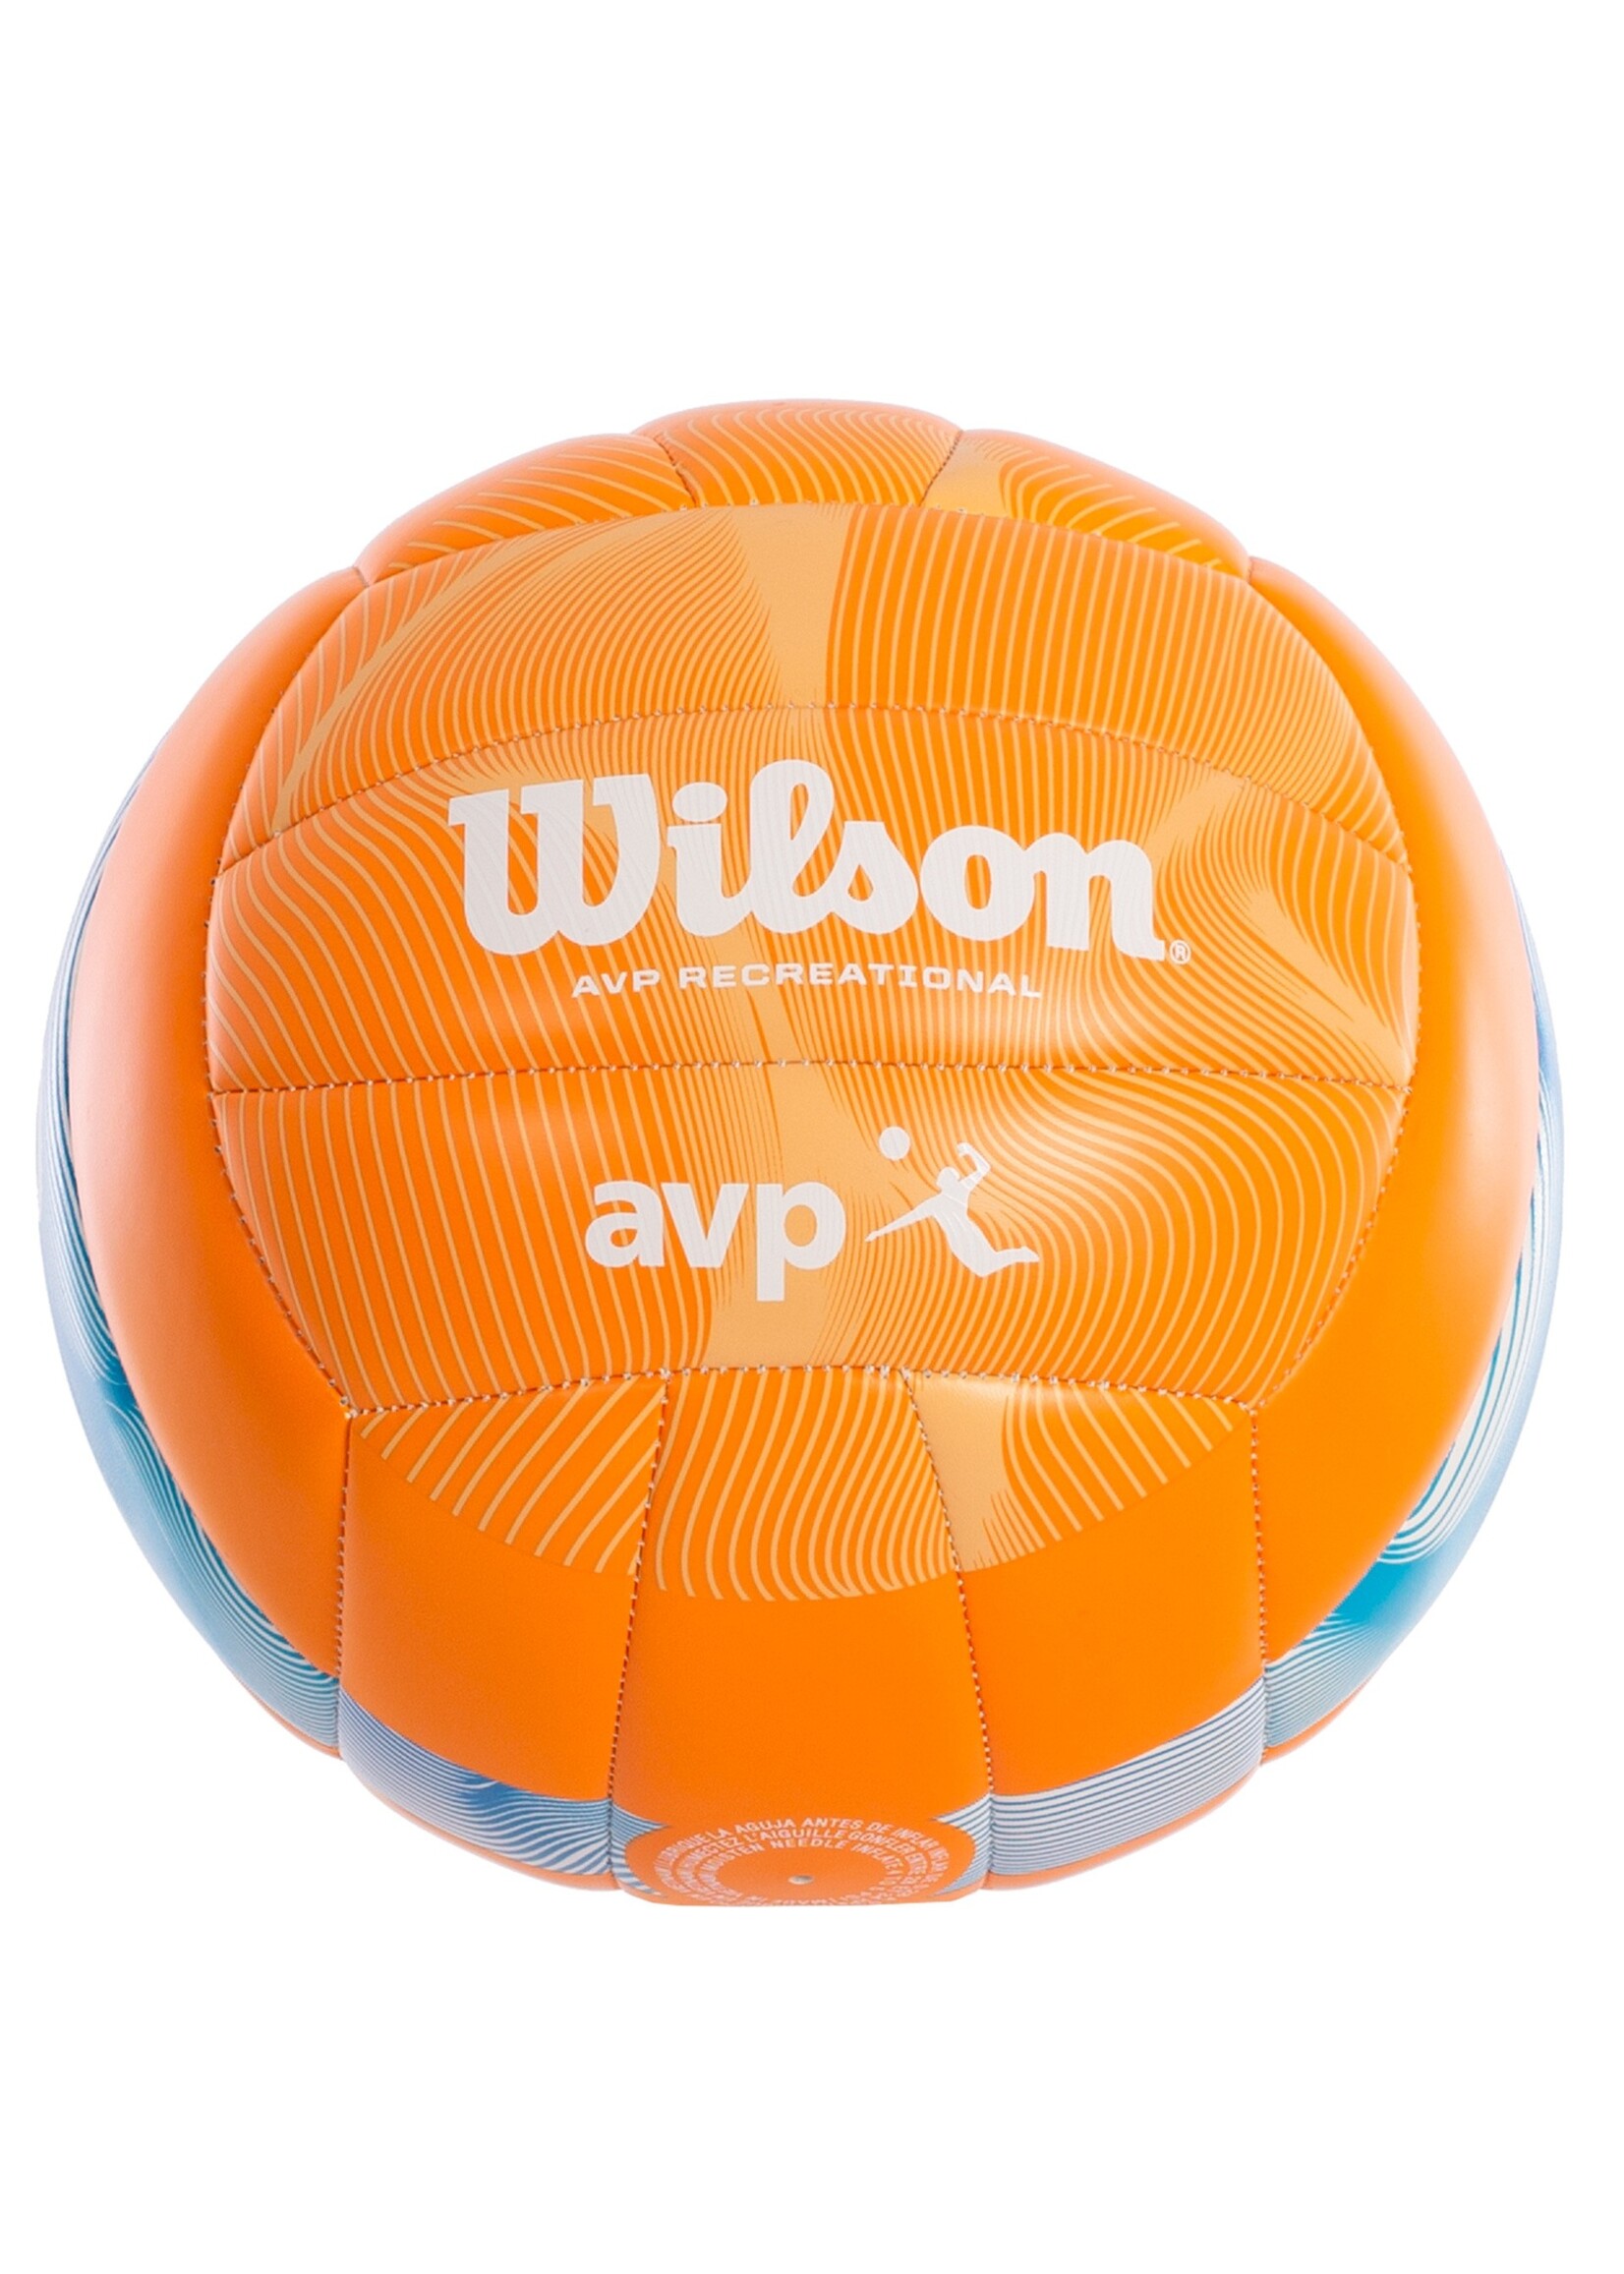 WILSON AVP MOVEMENT VB Orange/Blue -